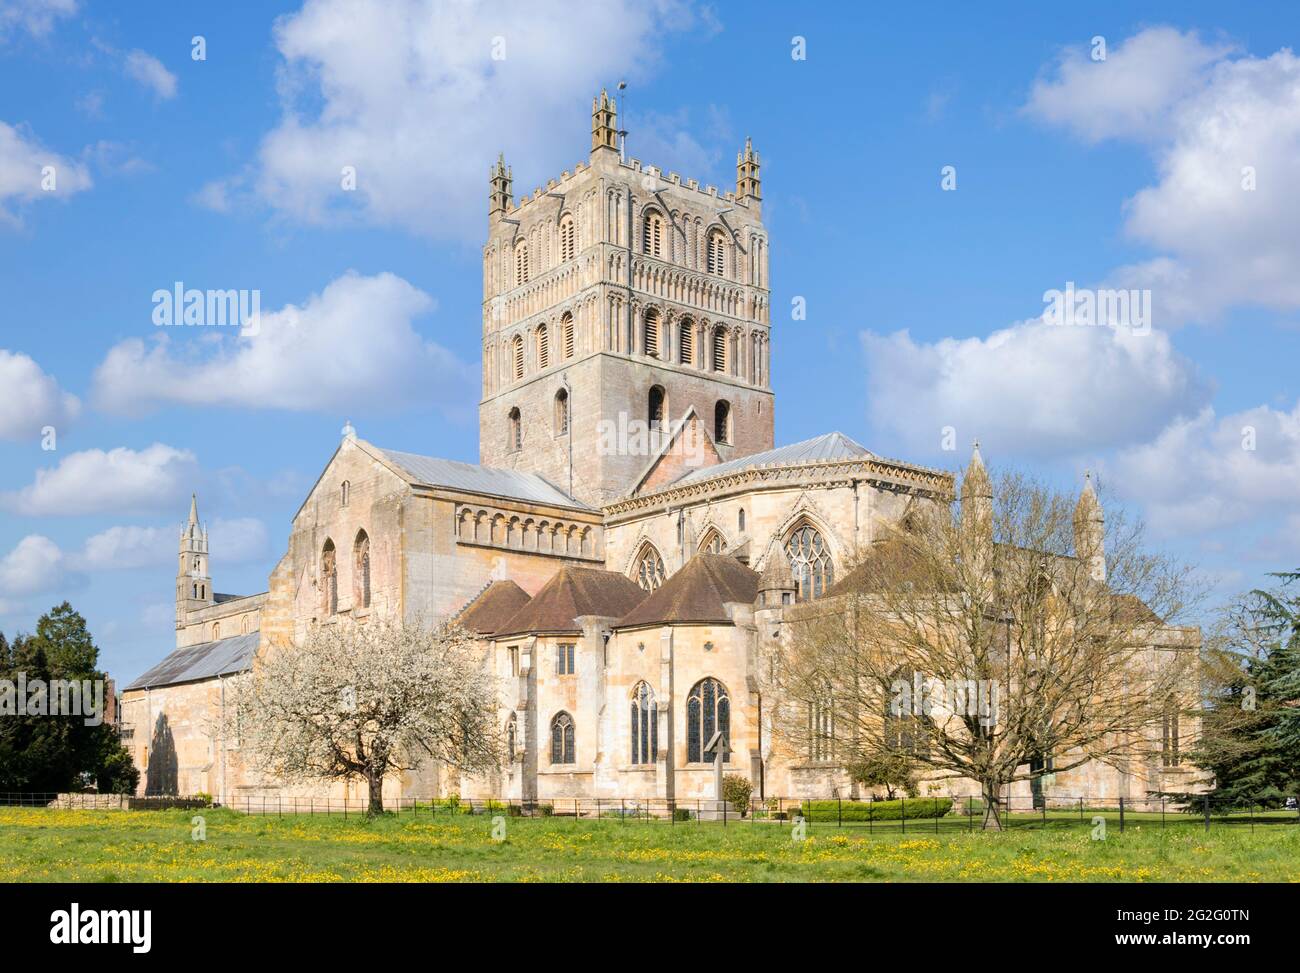 Abbaye de Tewkesbury Tewkesbury ou église de l'abbaye de St Mary la Vierge Tewkesbury, Gloucestershire, Angleterre, GB, Royaume-Uni, Europe Banque D'Images